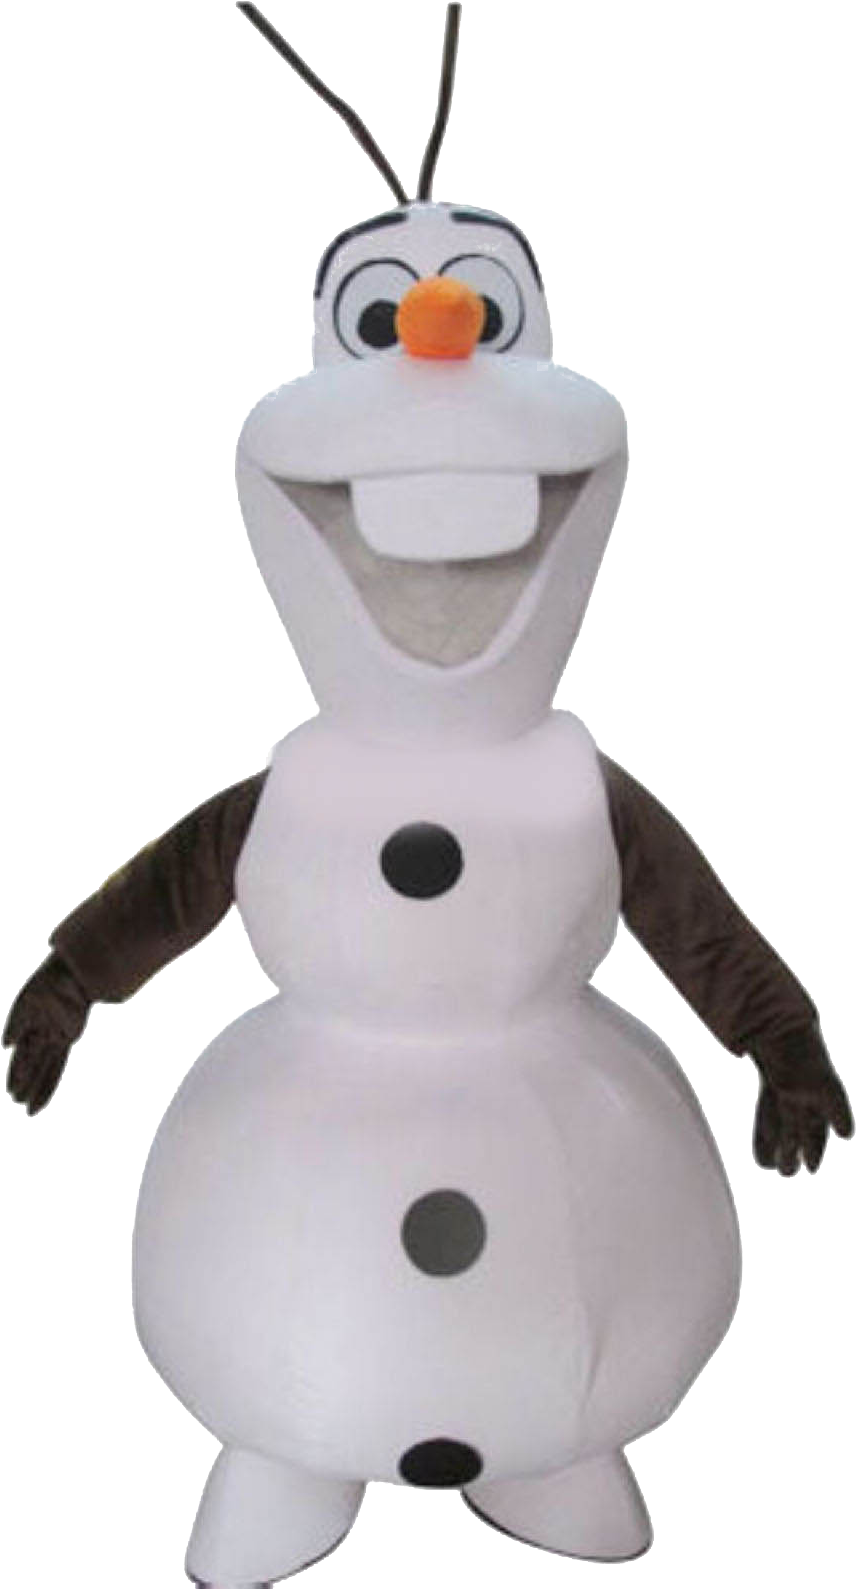 Previous Post - Olaf Mascot Costume (1600x1600)